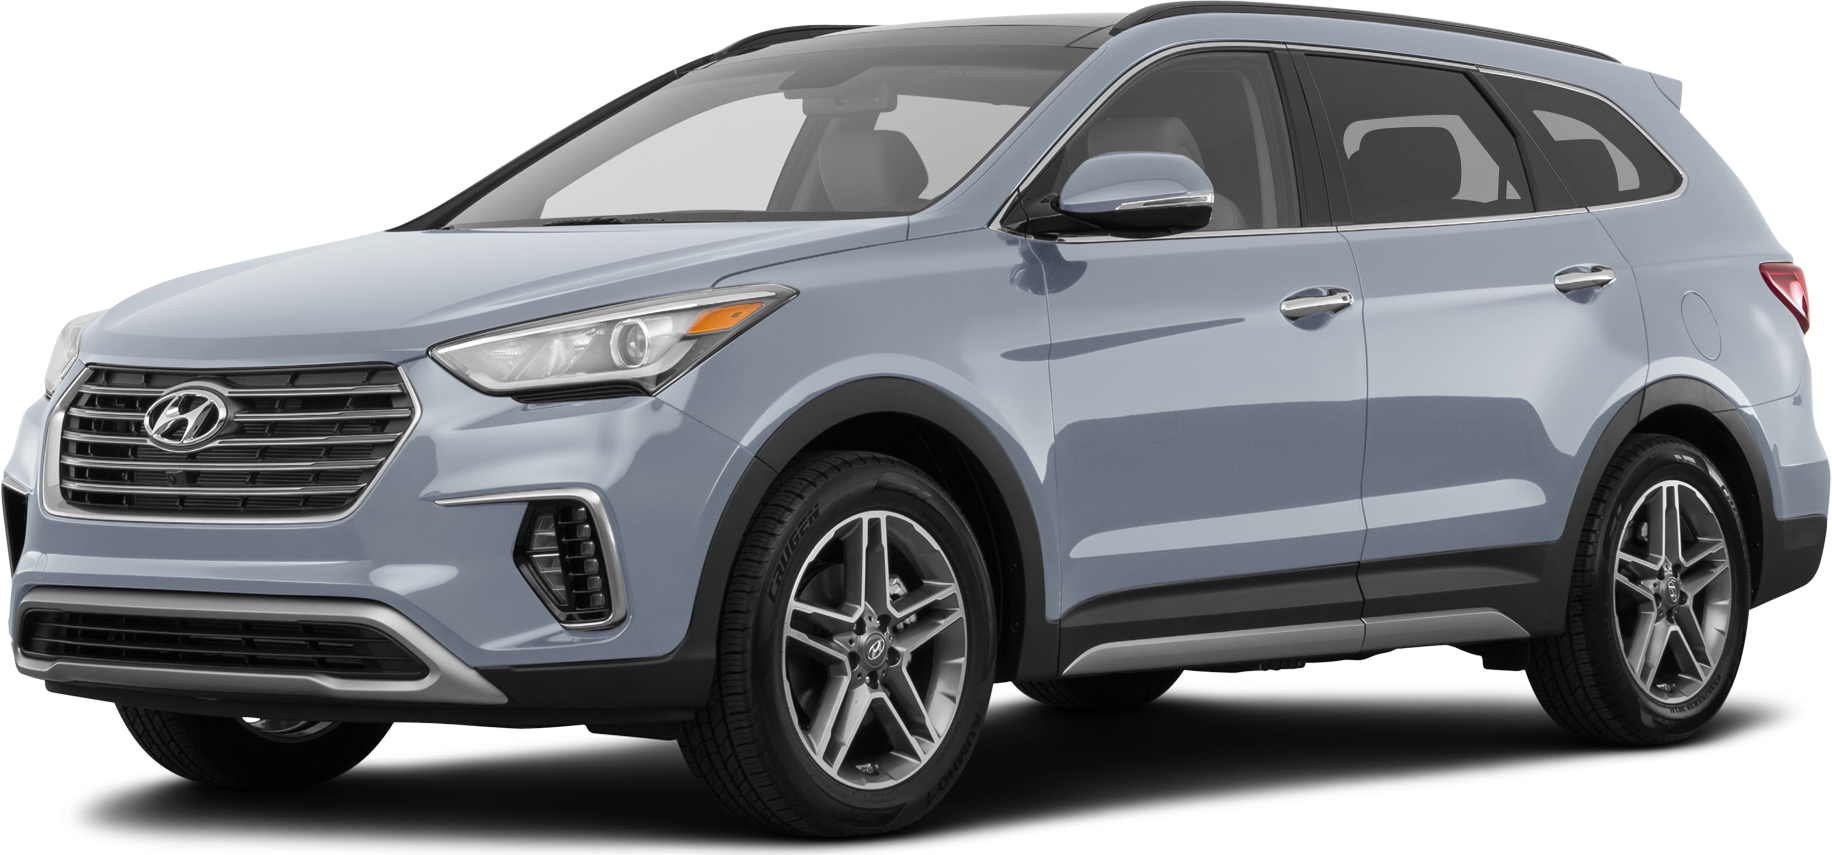 2017 Hyundai Santa Fe Values amp Cars for Sale Kelley Blue Book